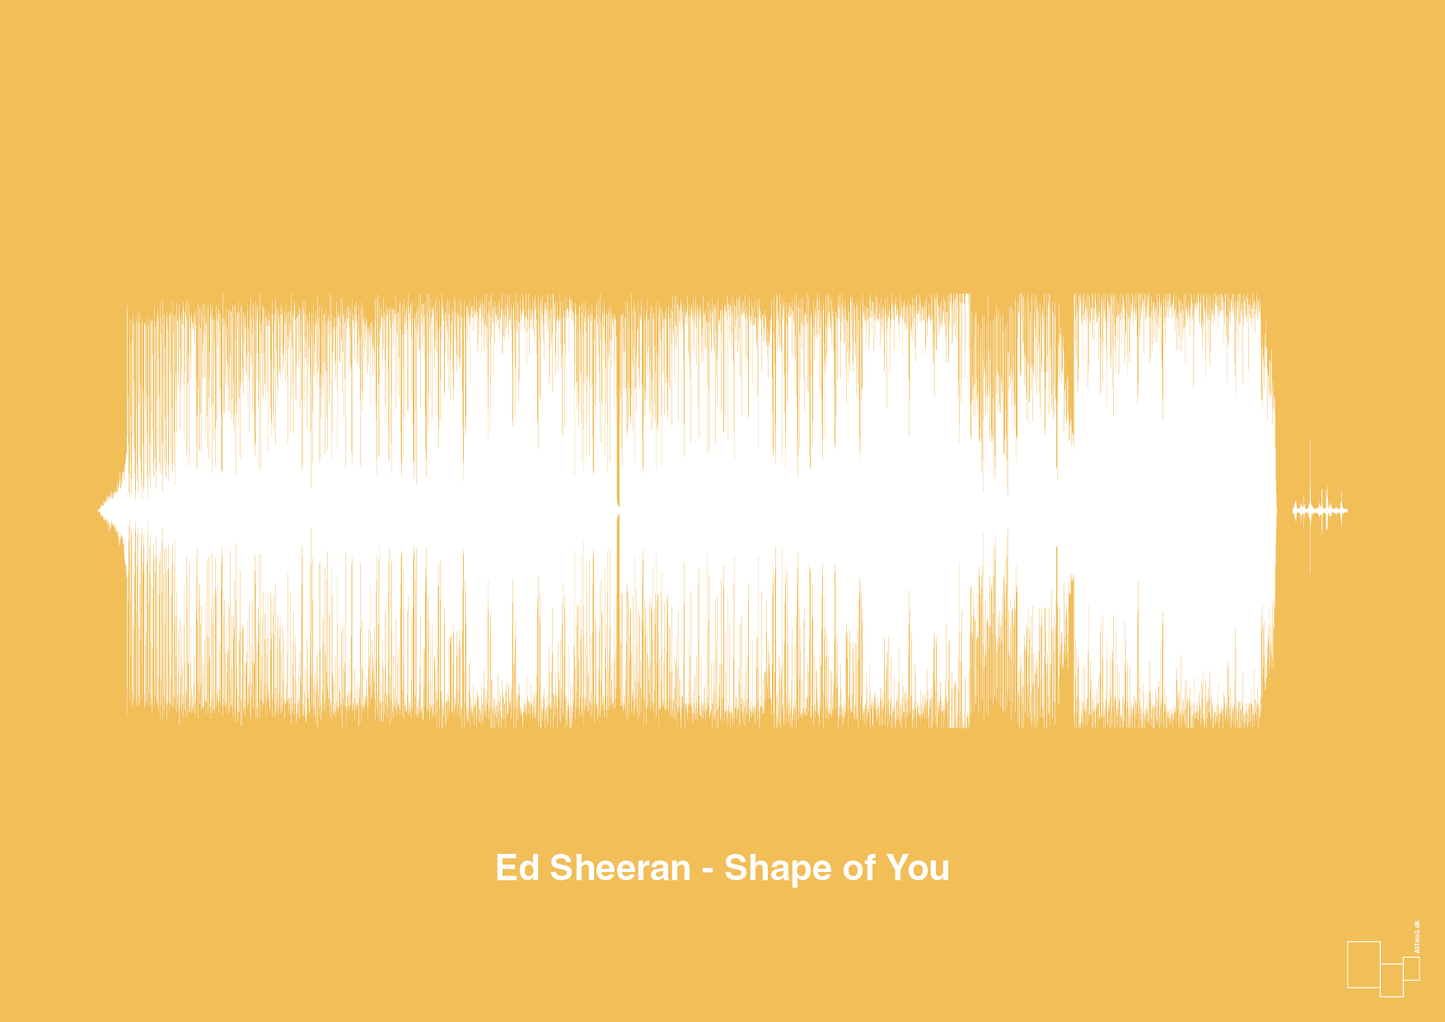 ed sheeran - shape of you - Plakat med Musik i Honeycomb